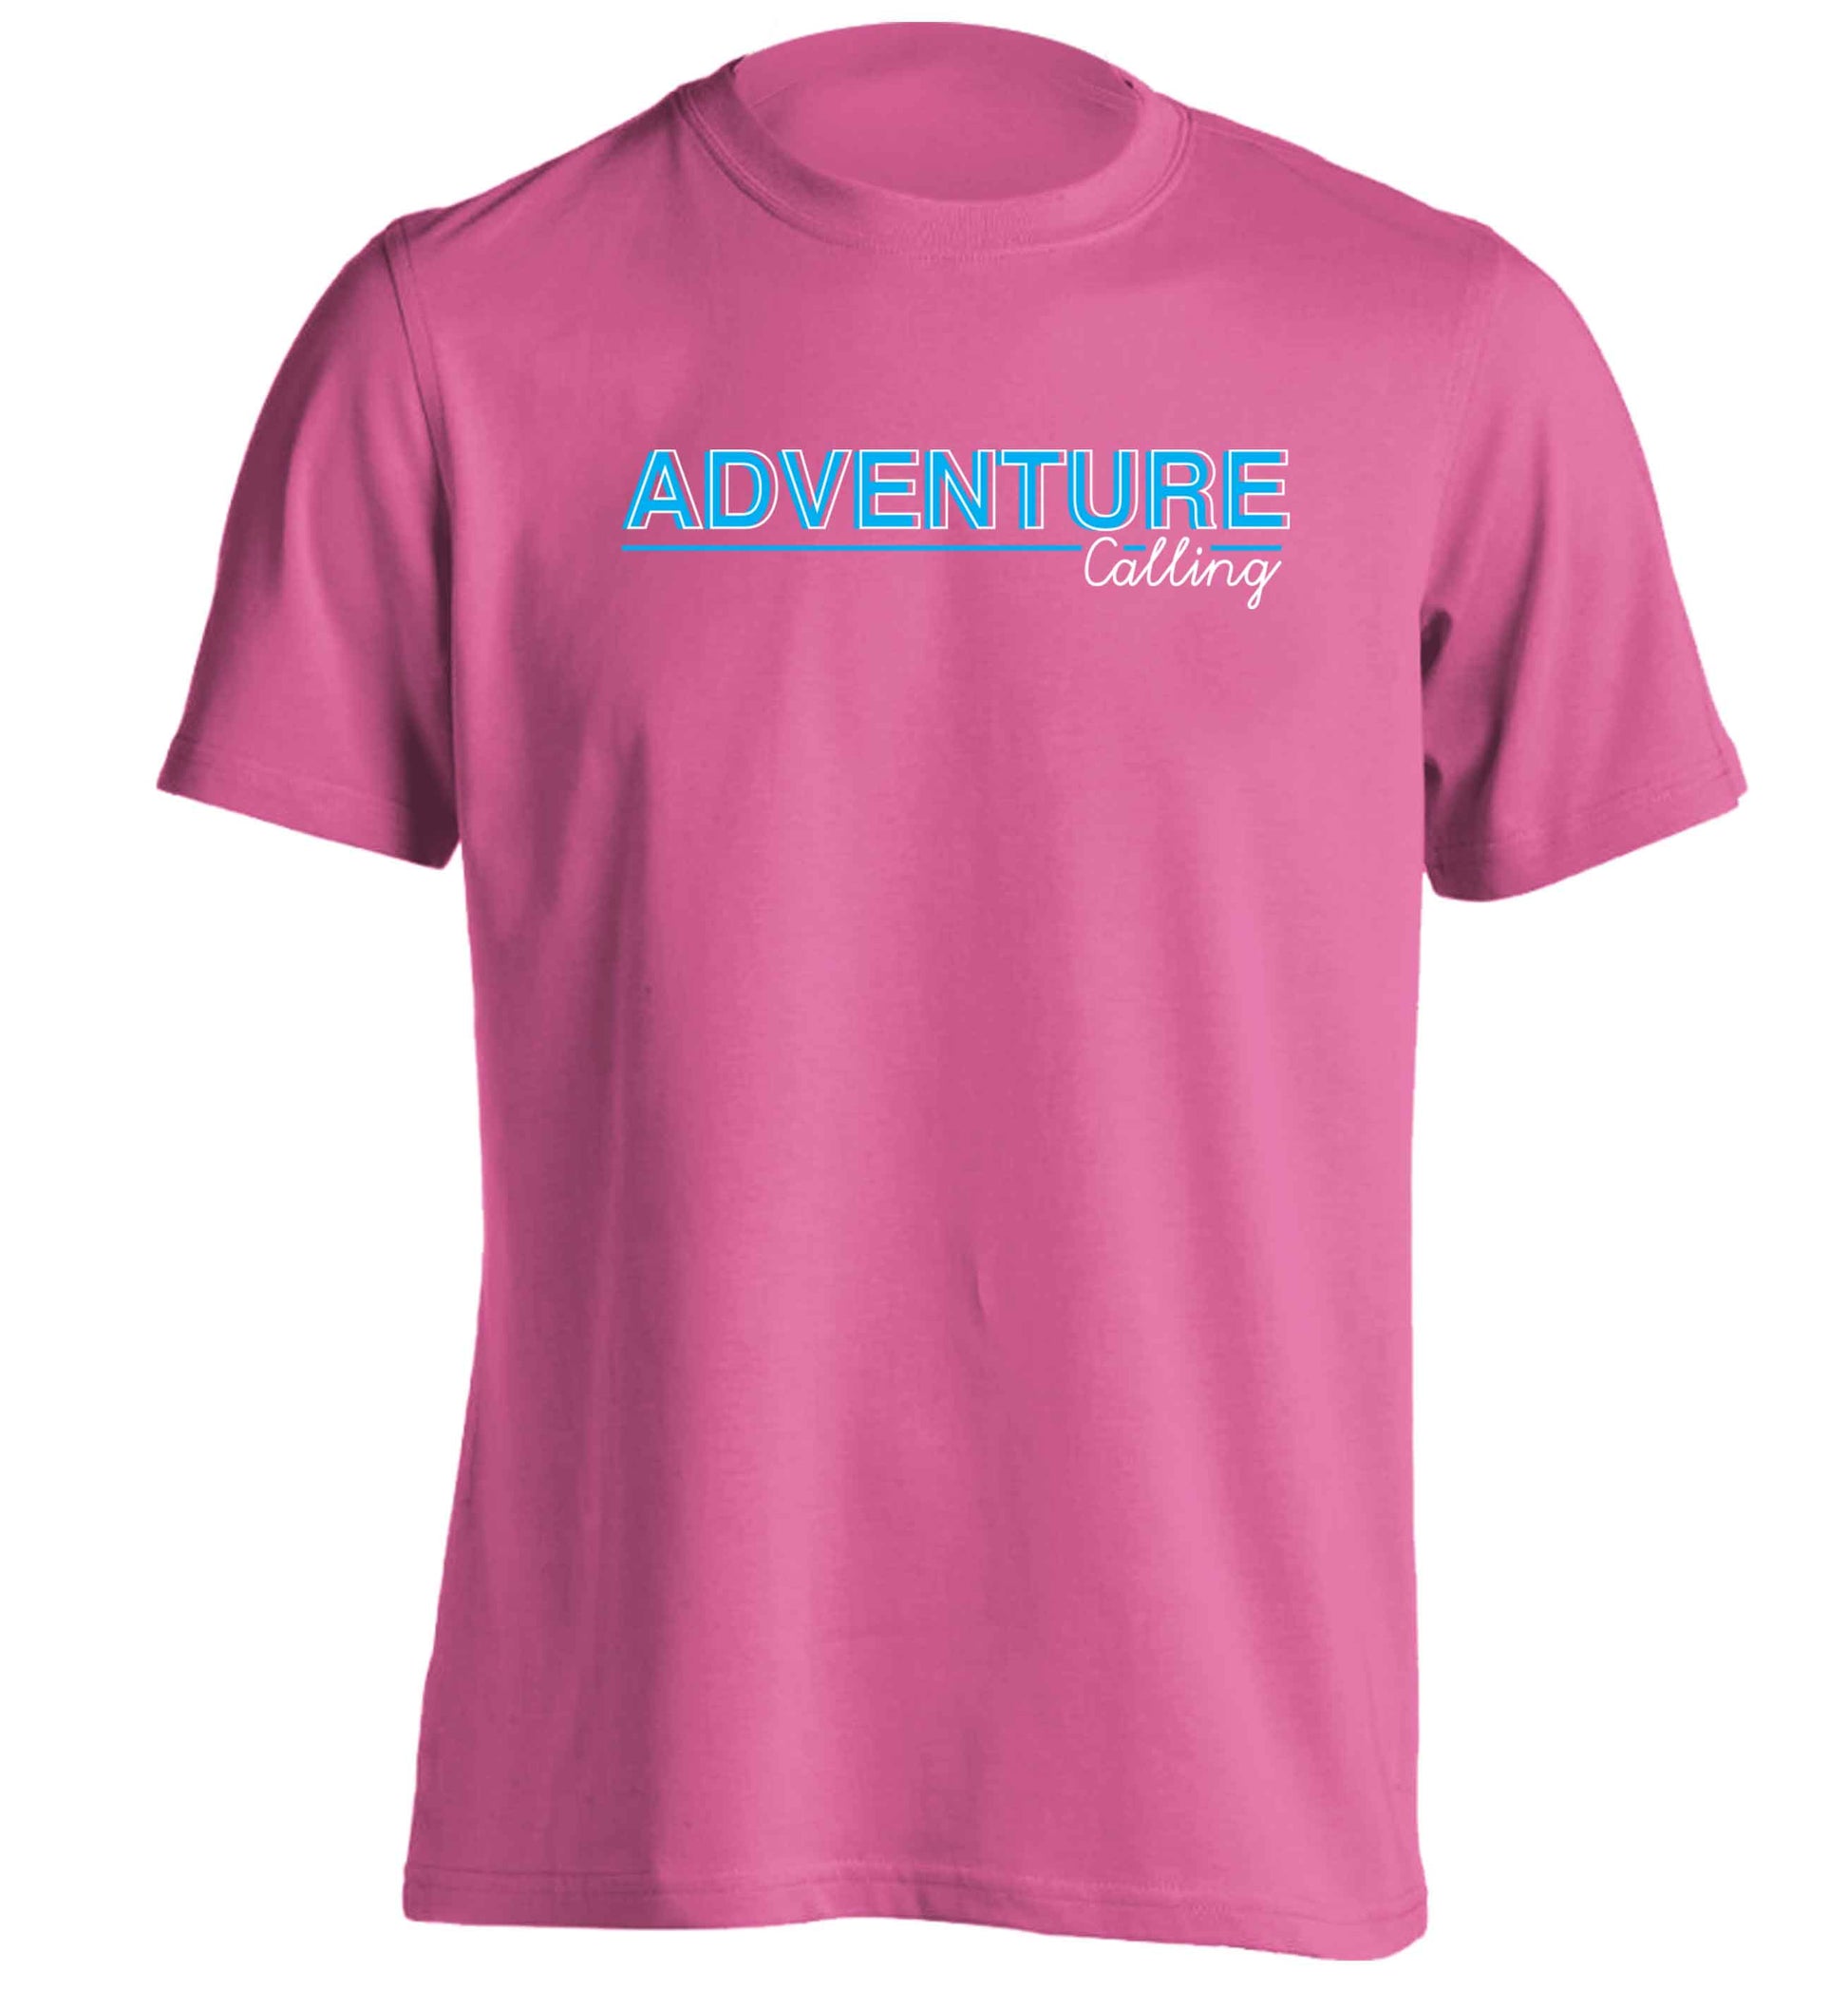 Adventure calling adults unisex pink Tshirt 2XL